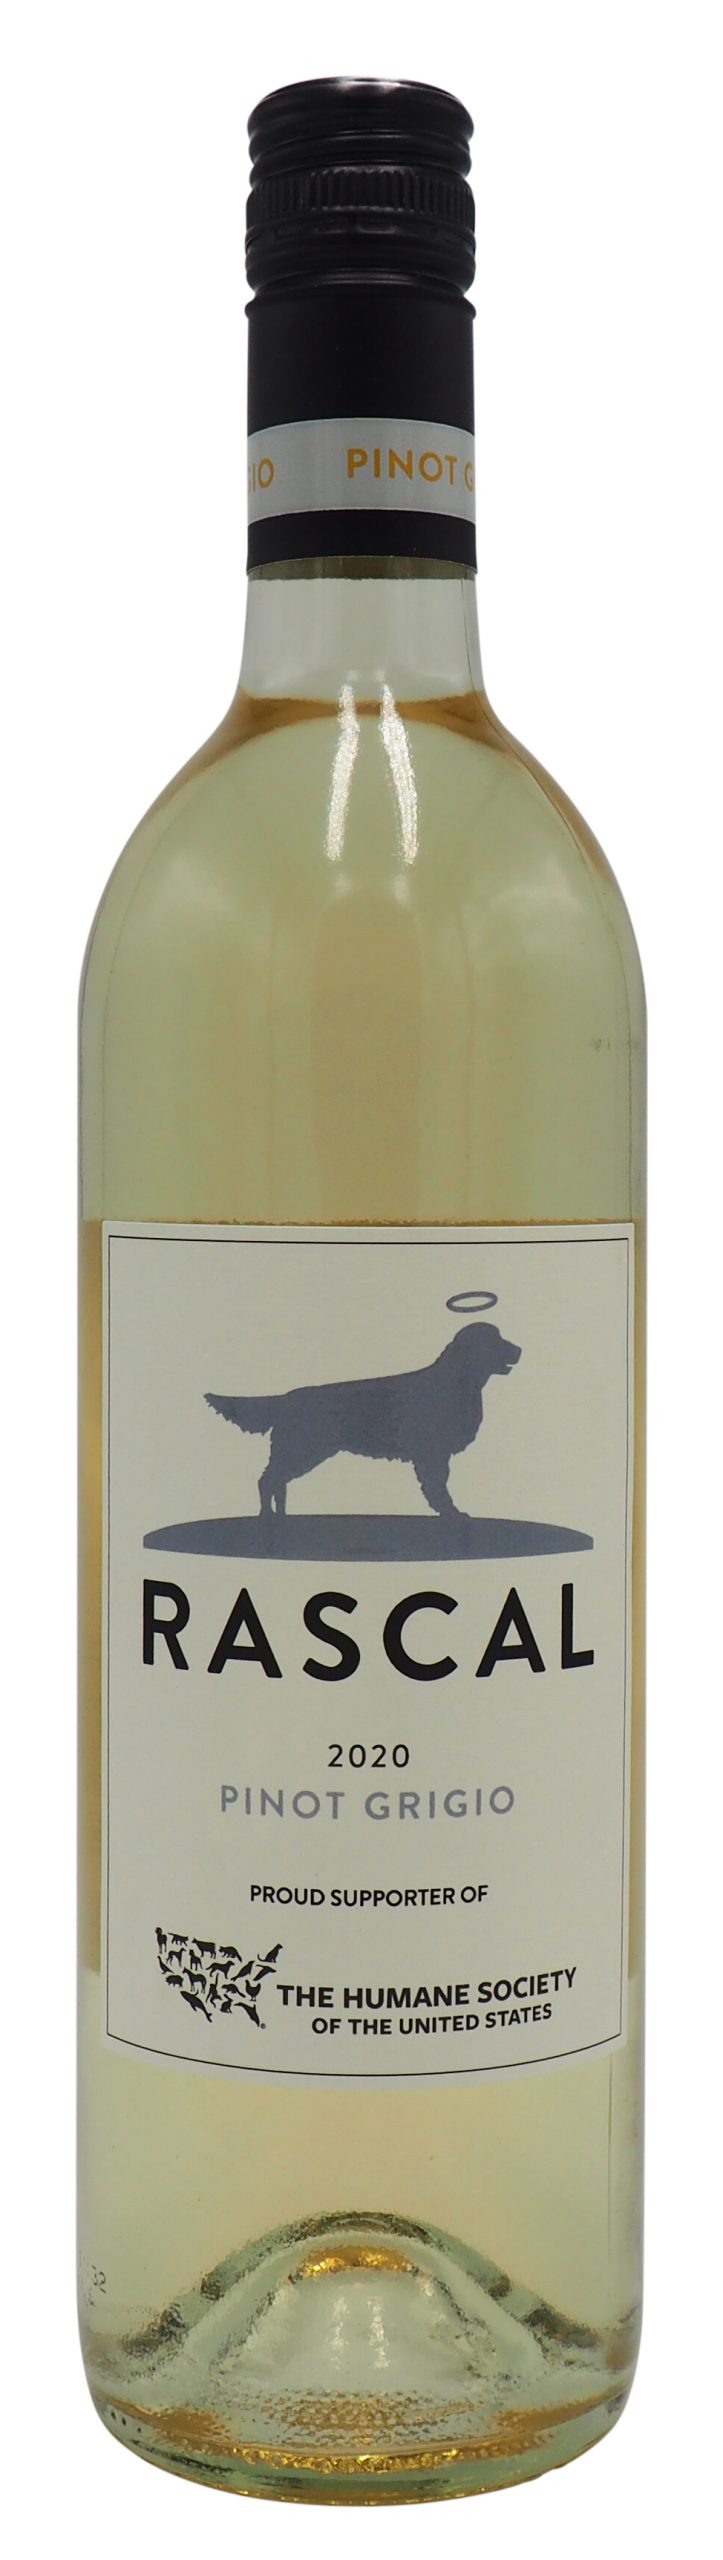 Rascal Pinot Grigio 2020, Delle Venezie